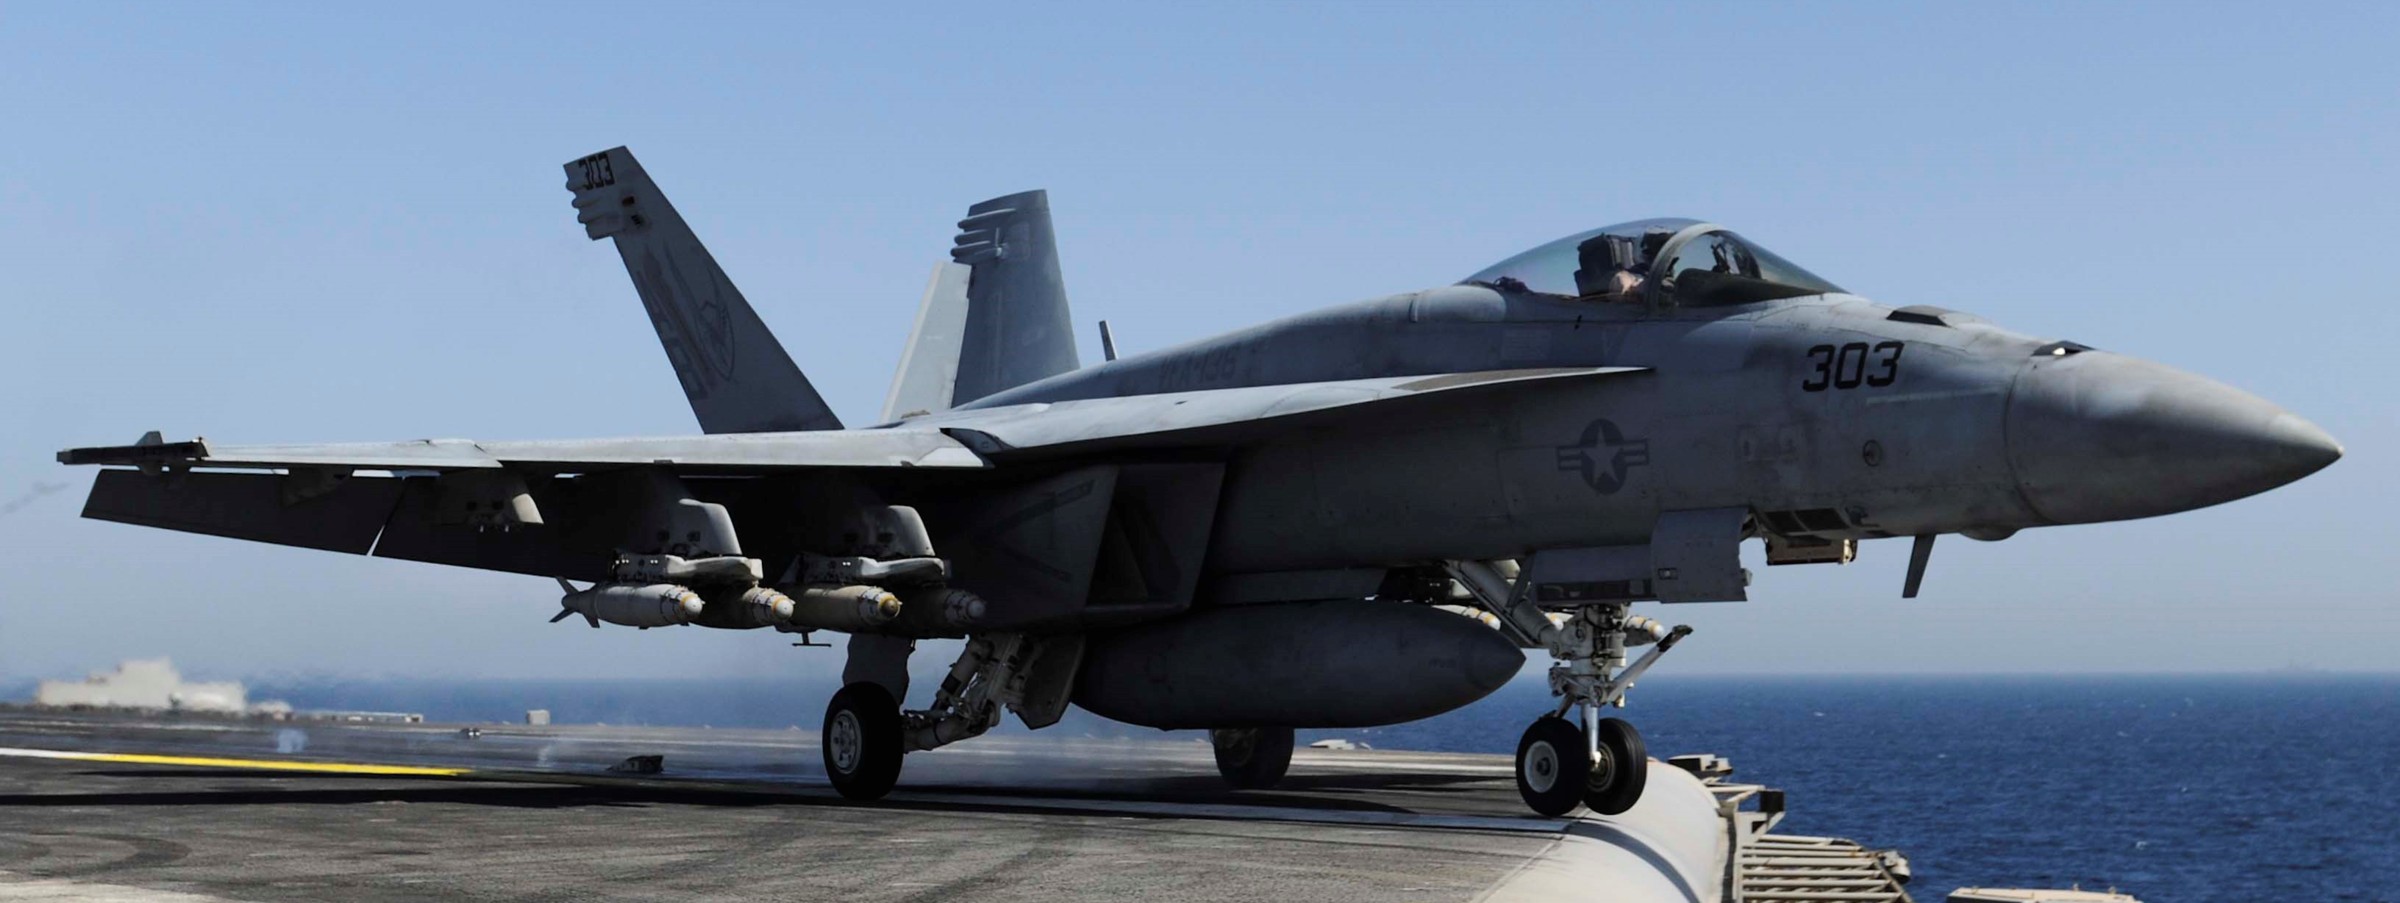 vfa-136 knighthawks strike fighter squadron f/a-18e super hornet 2015 08 cvw-1 uss george washington cvn-73